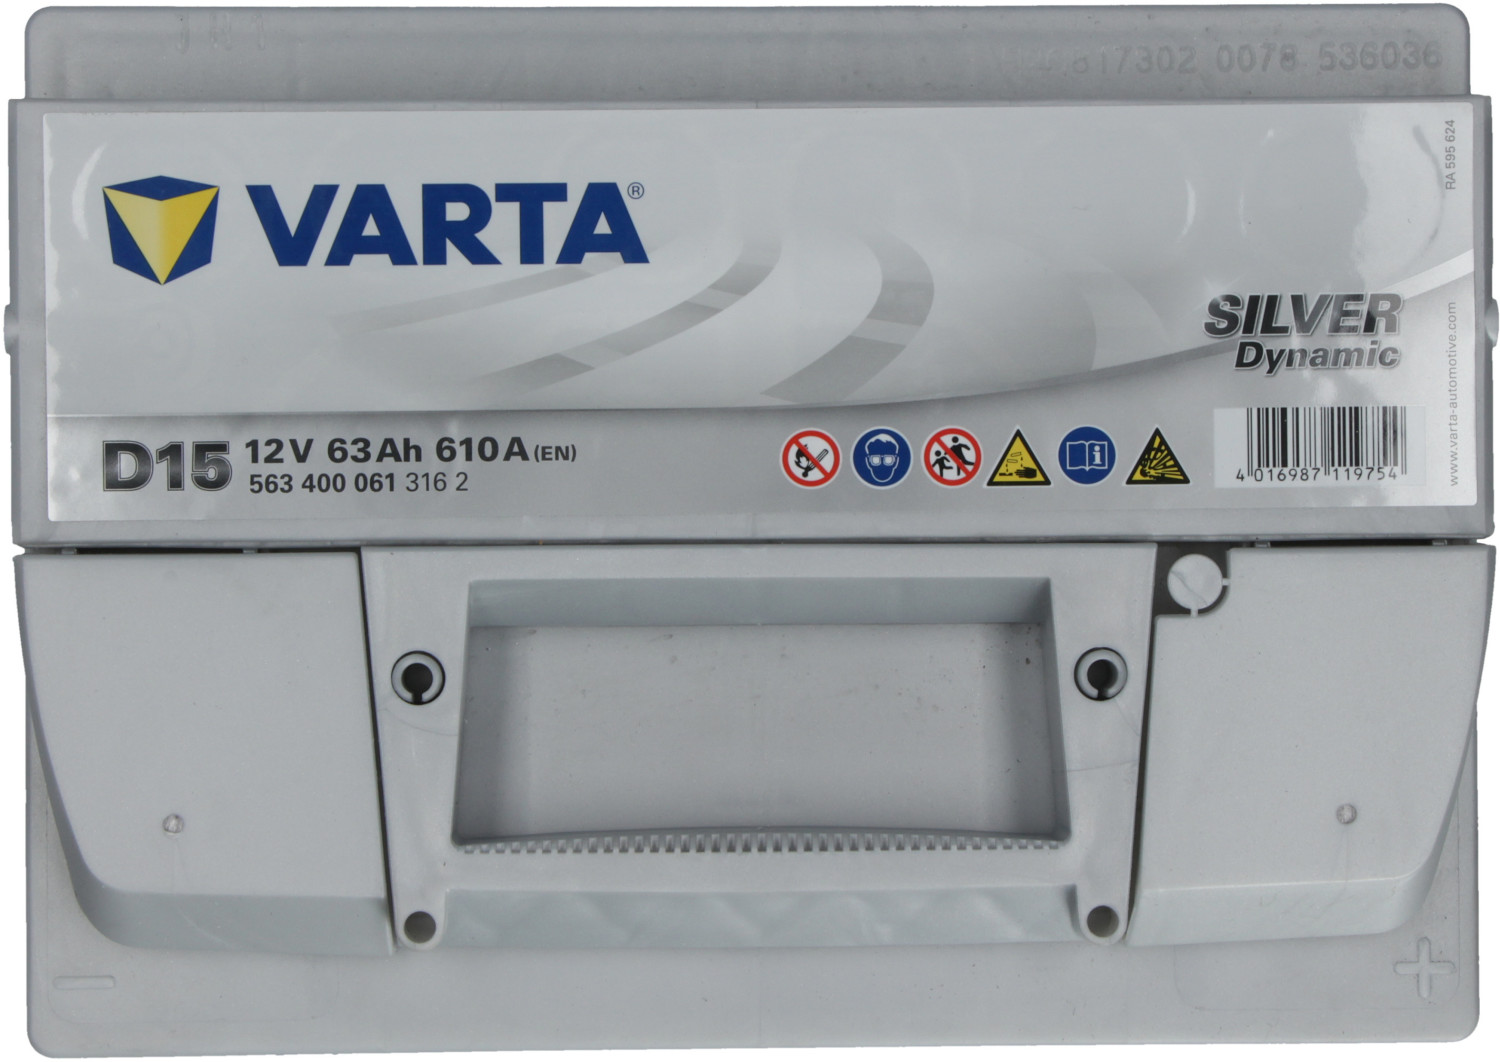 Køb VARTA D15 (Bilbatteri) → Hurtig & Billig levering